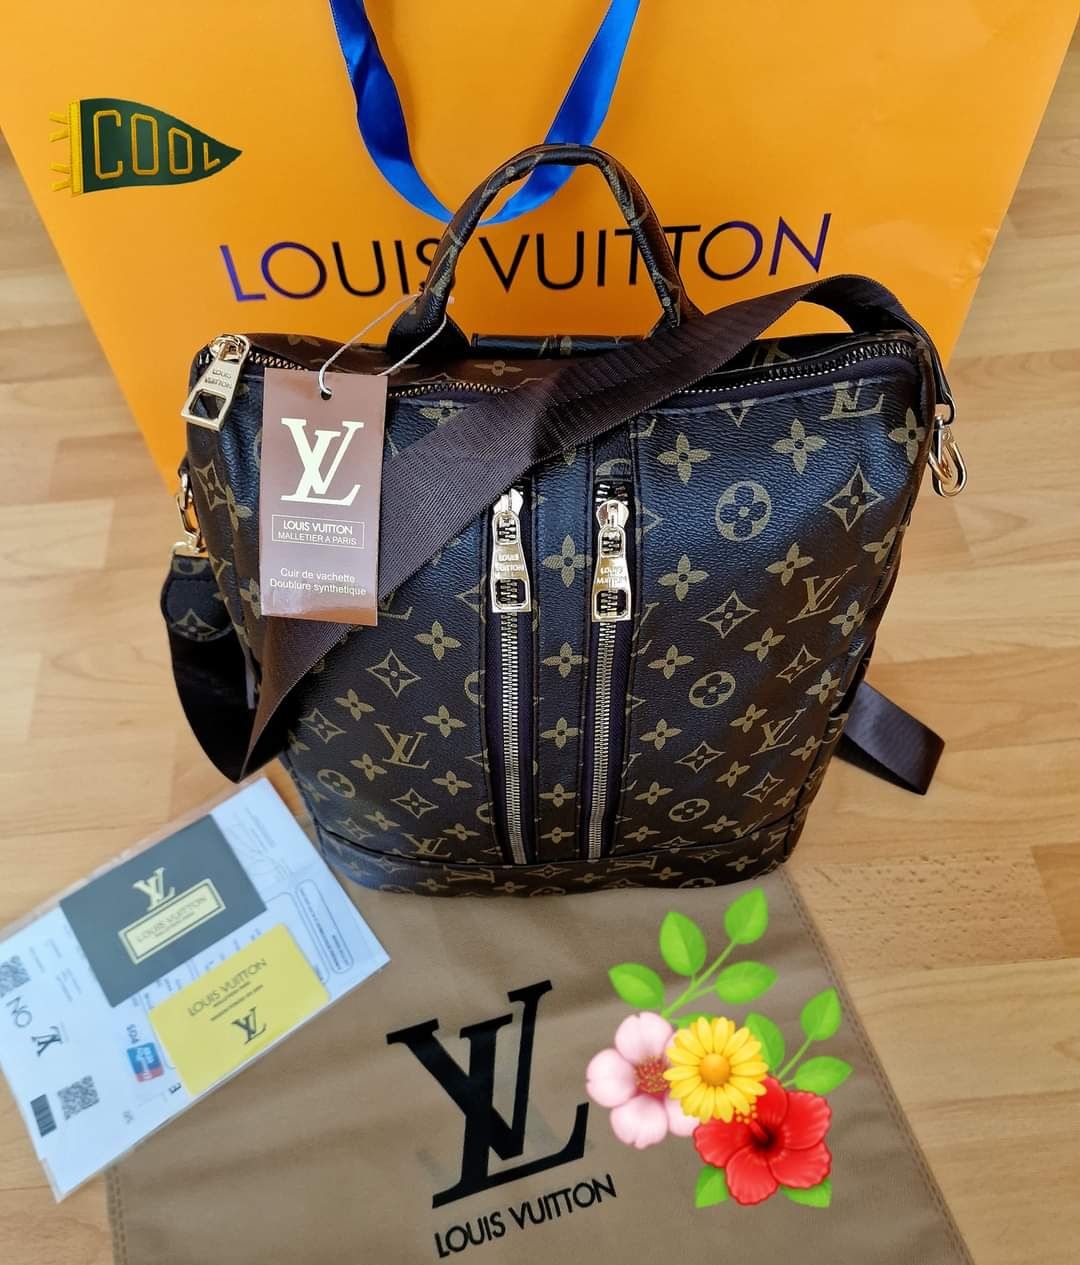 Rucsac Loyis Vuitton 2 in 1,new model, accesorii metalice,sa